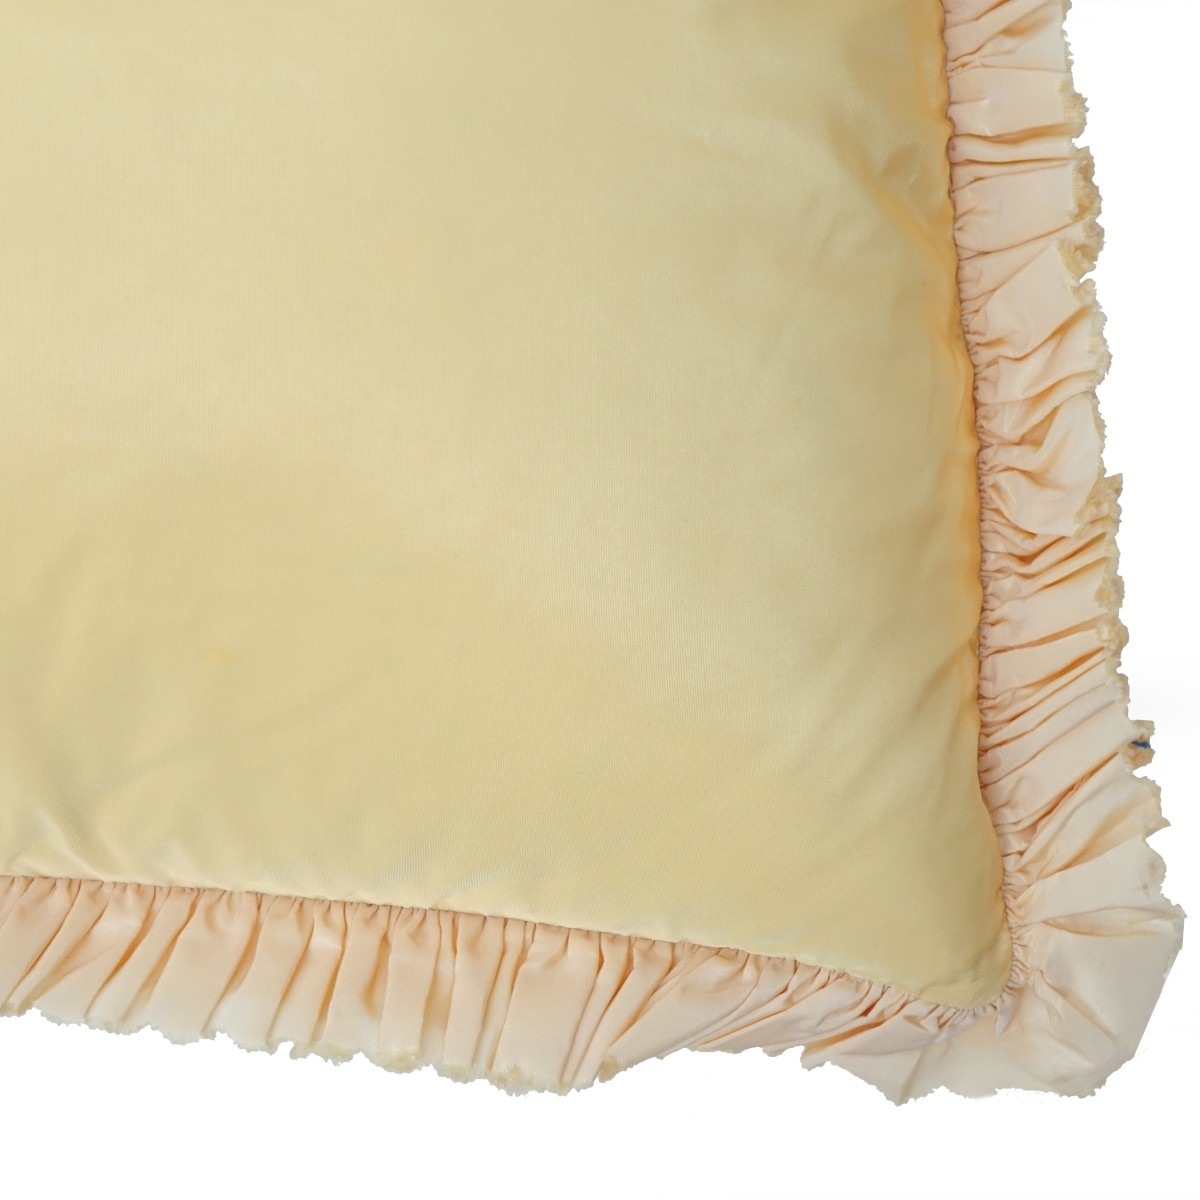 Four Silk Pillows